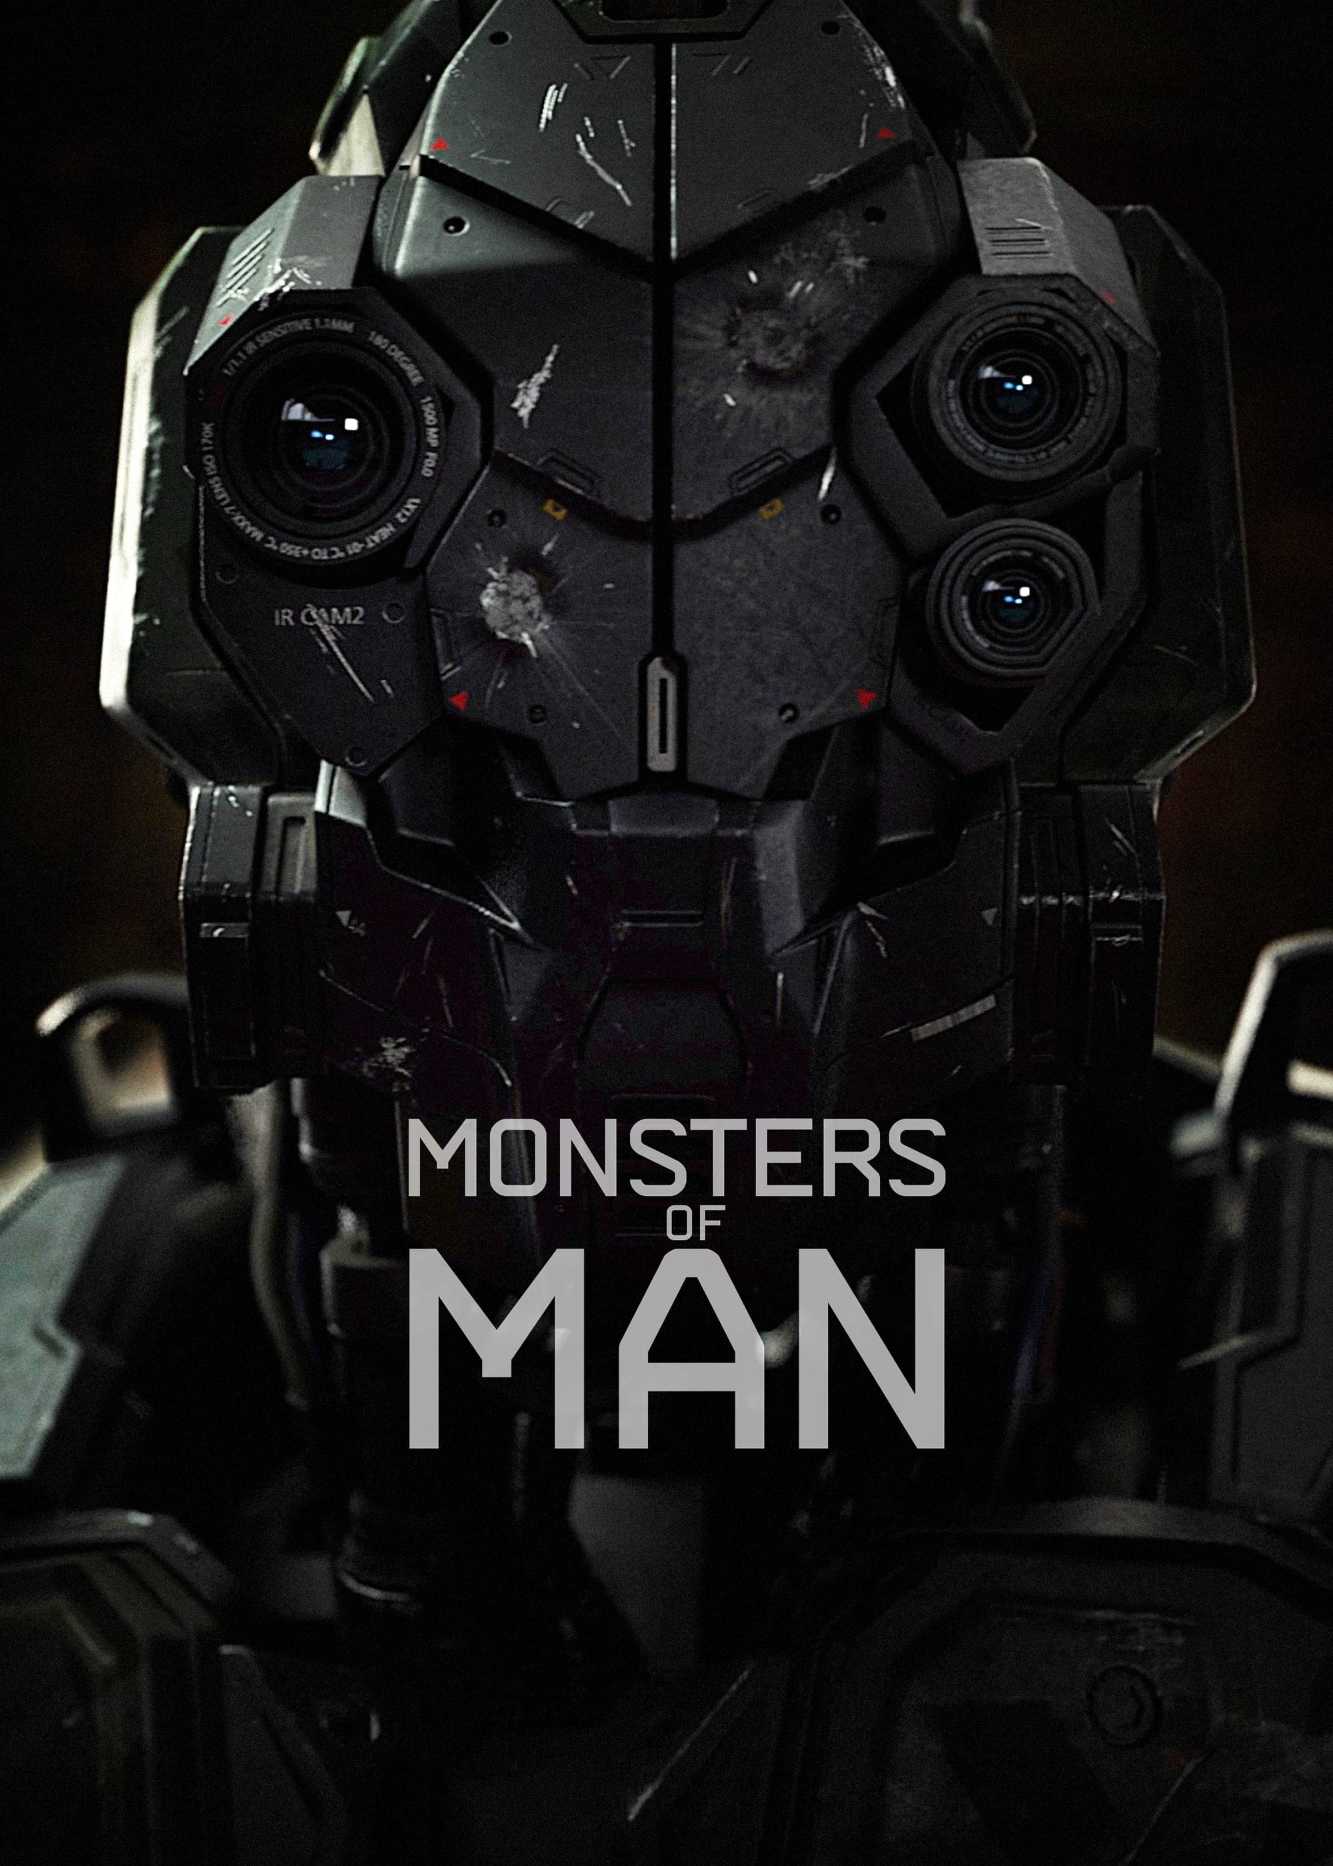 Monsters of man - Monsters of man